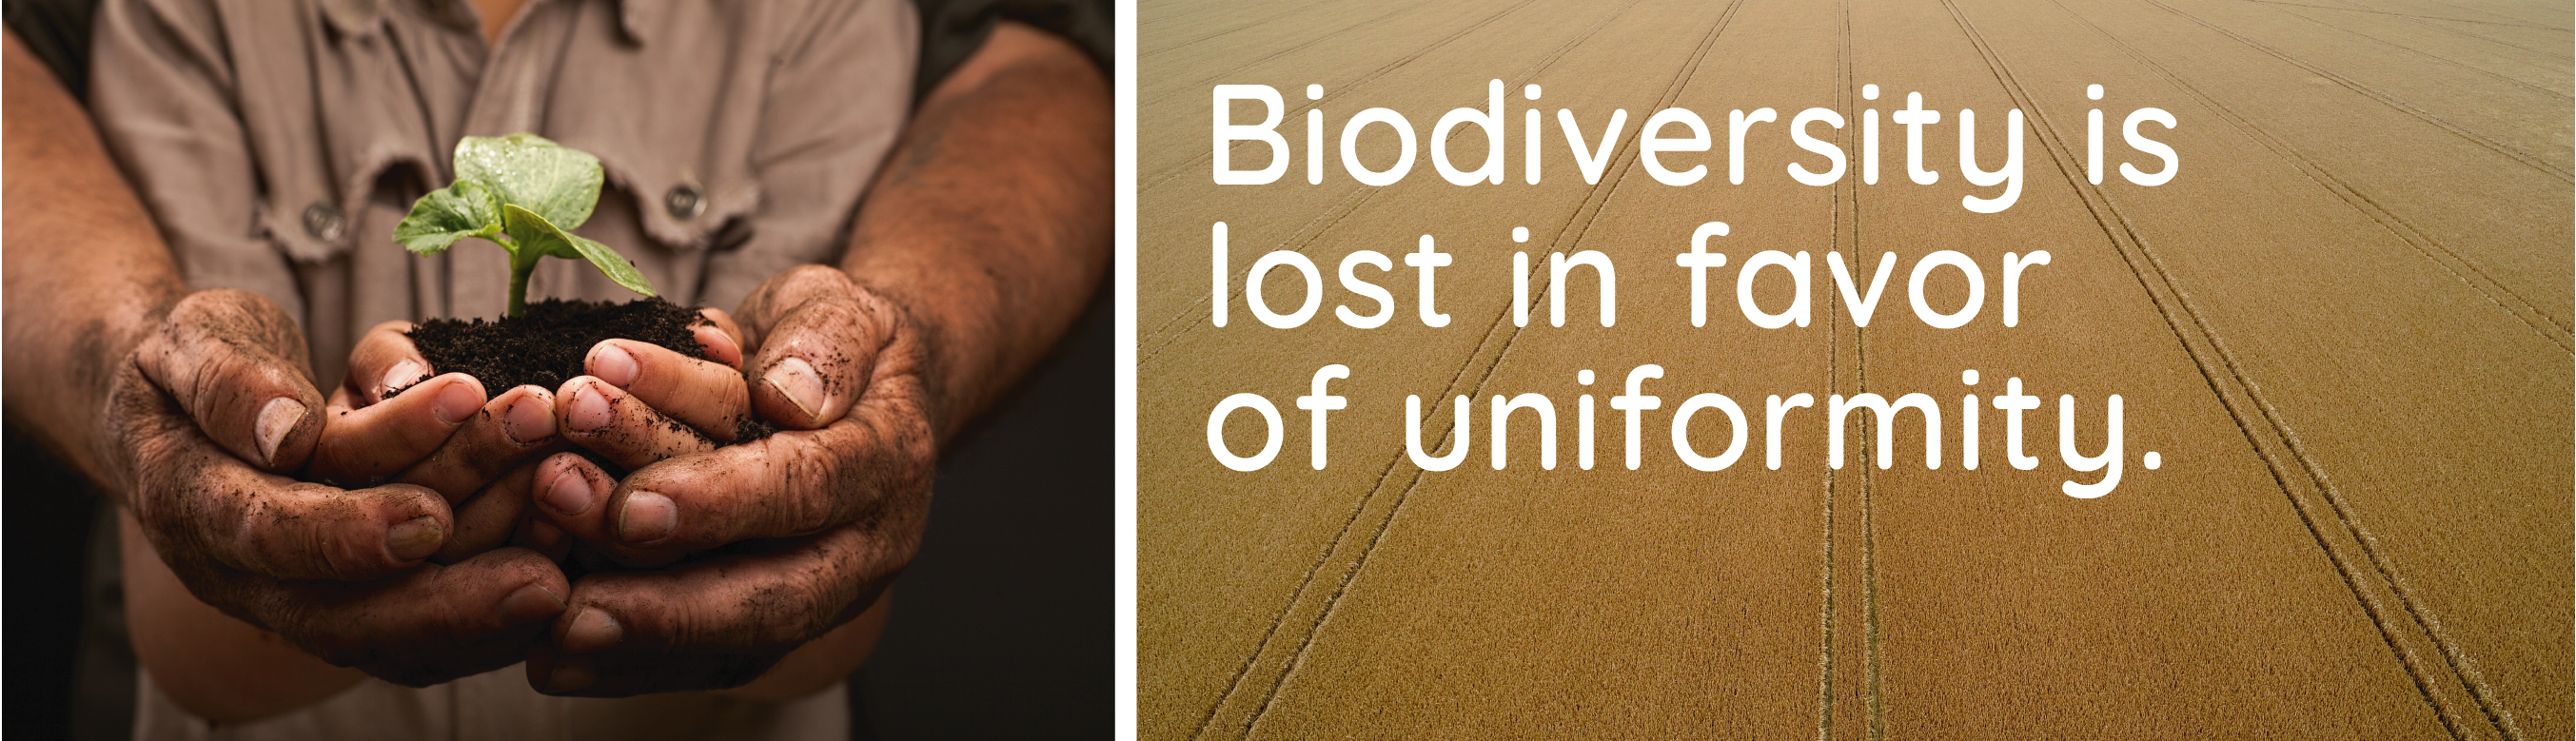 Biodiversity is lost in favor of uniformity.